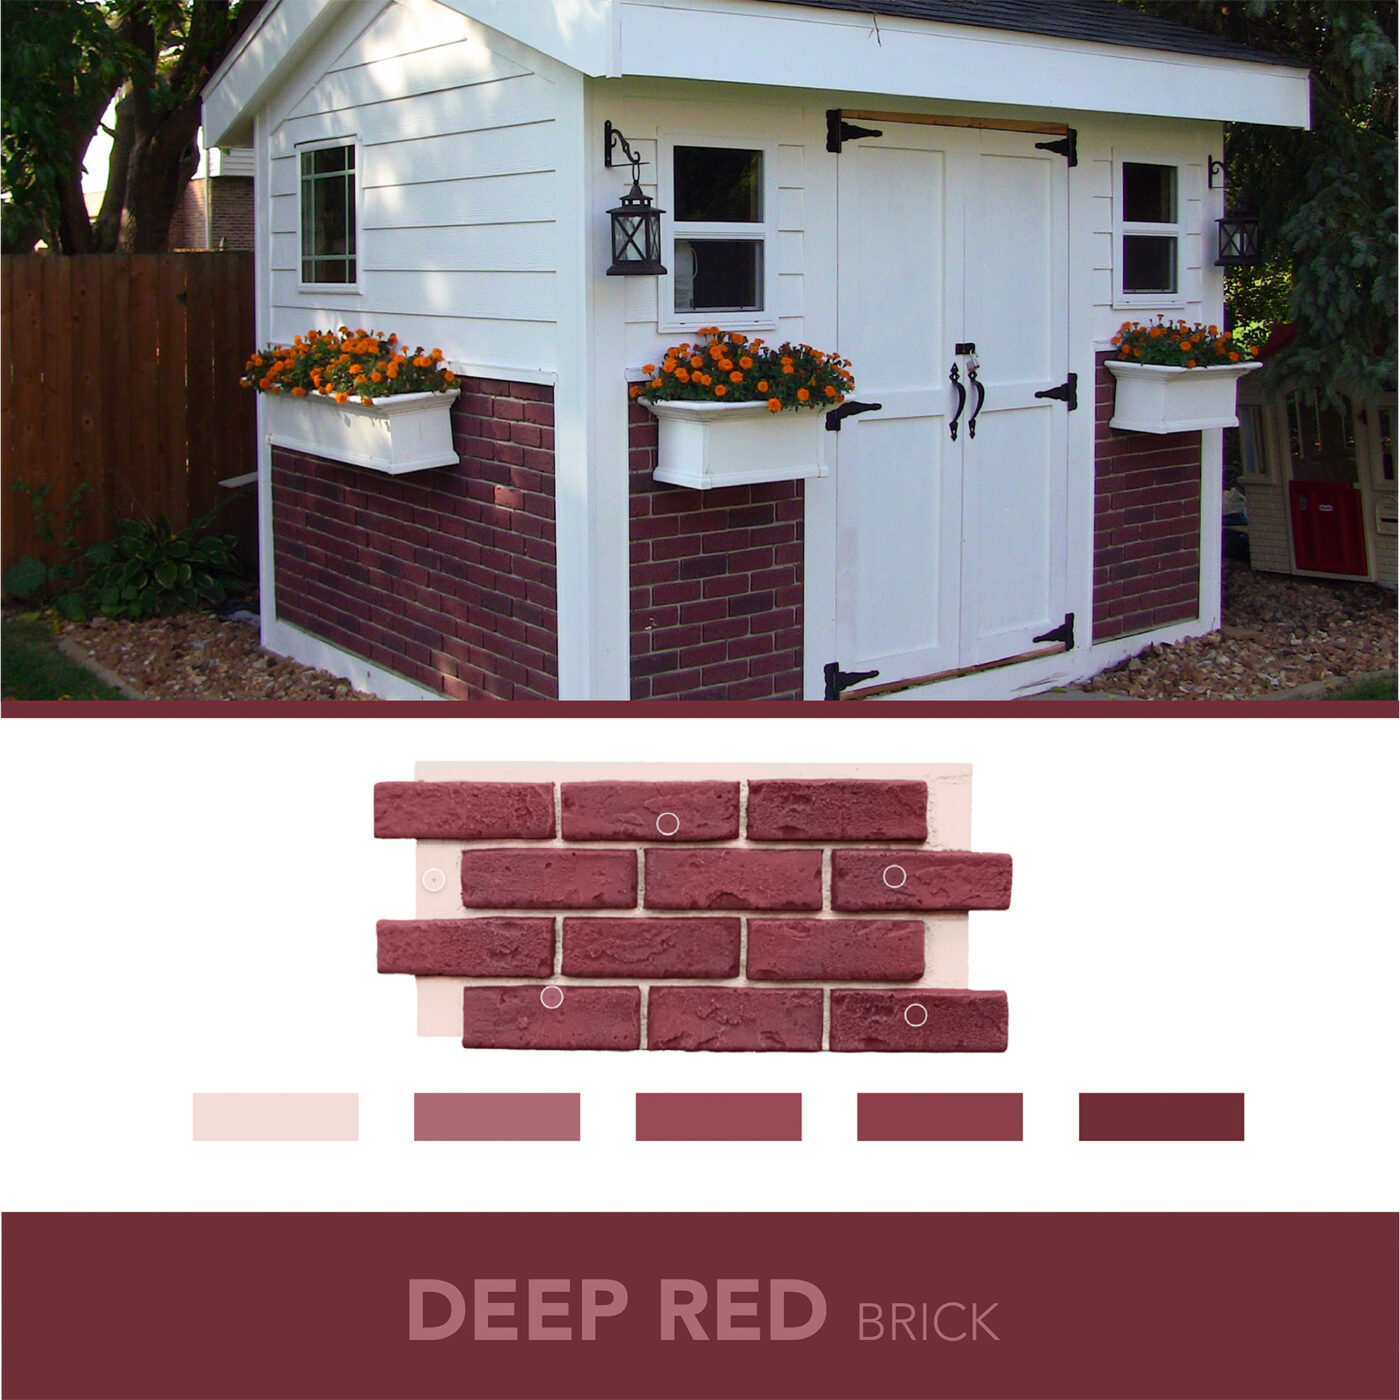 Deep Red Half Panel